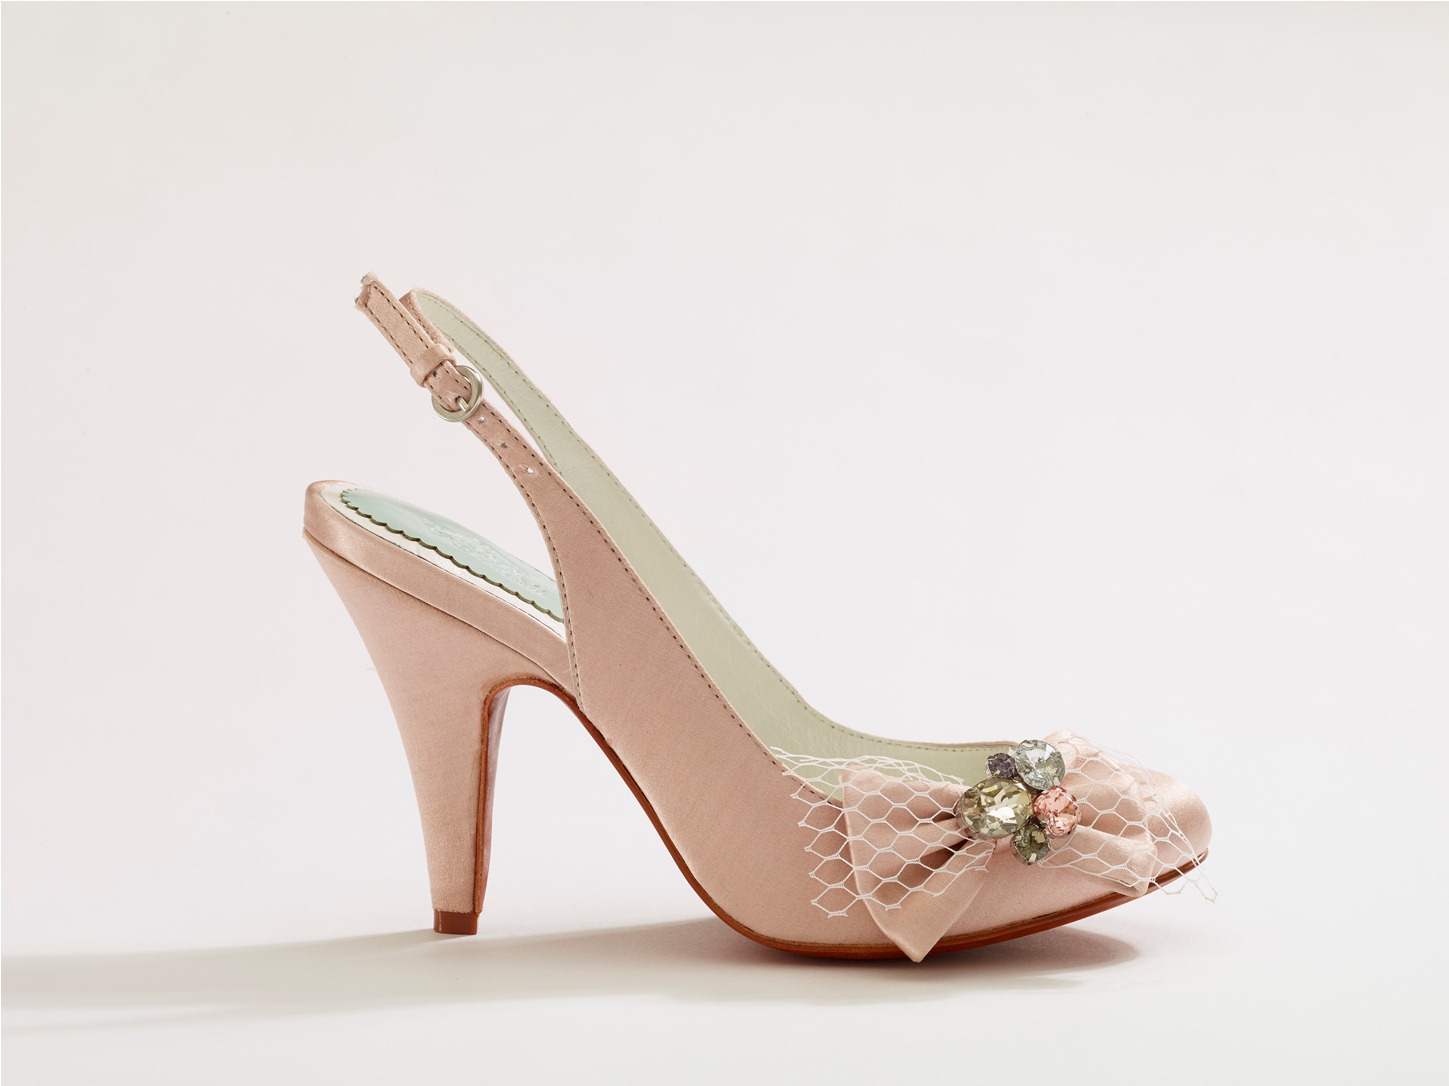 Beautiful Bridal Shoes from Merle & Morris - Iris